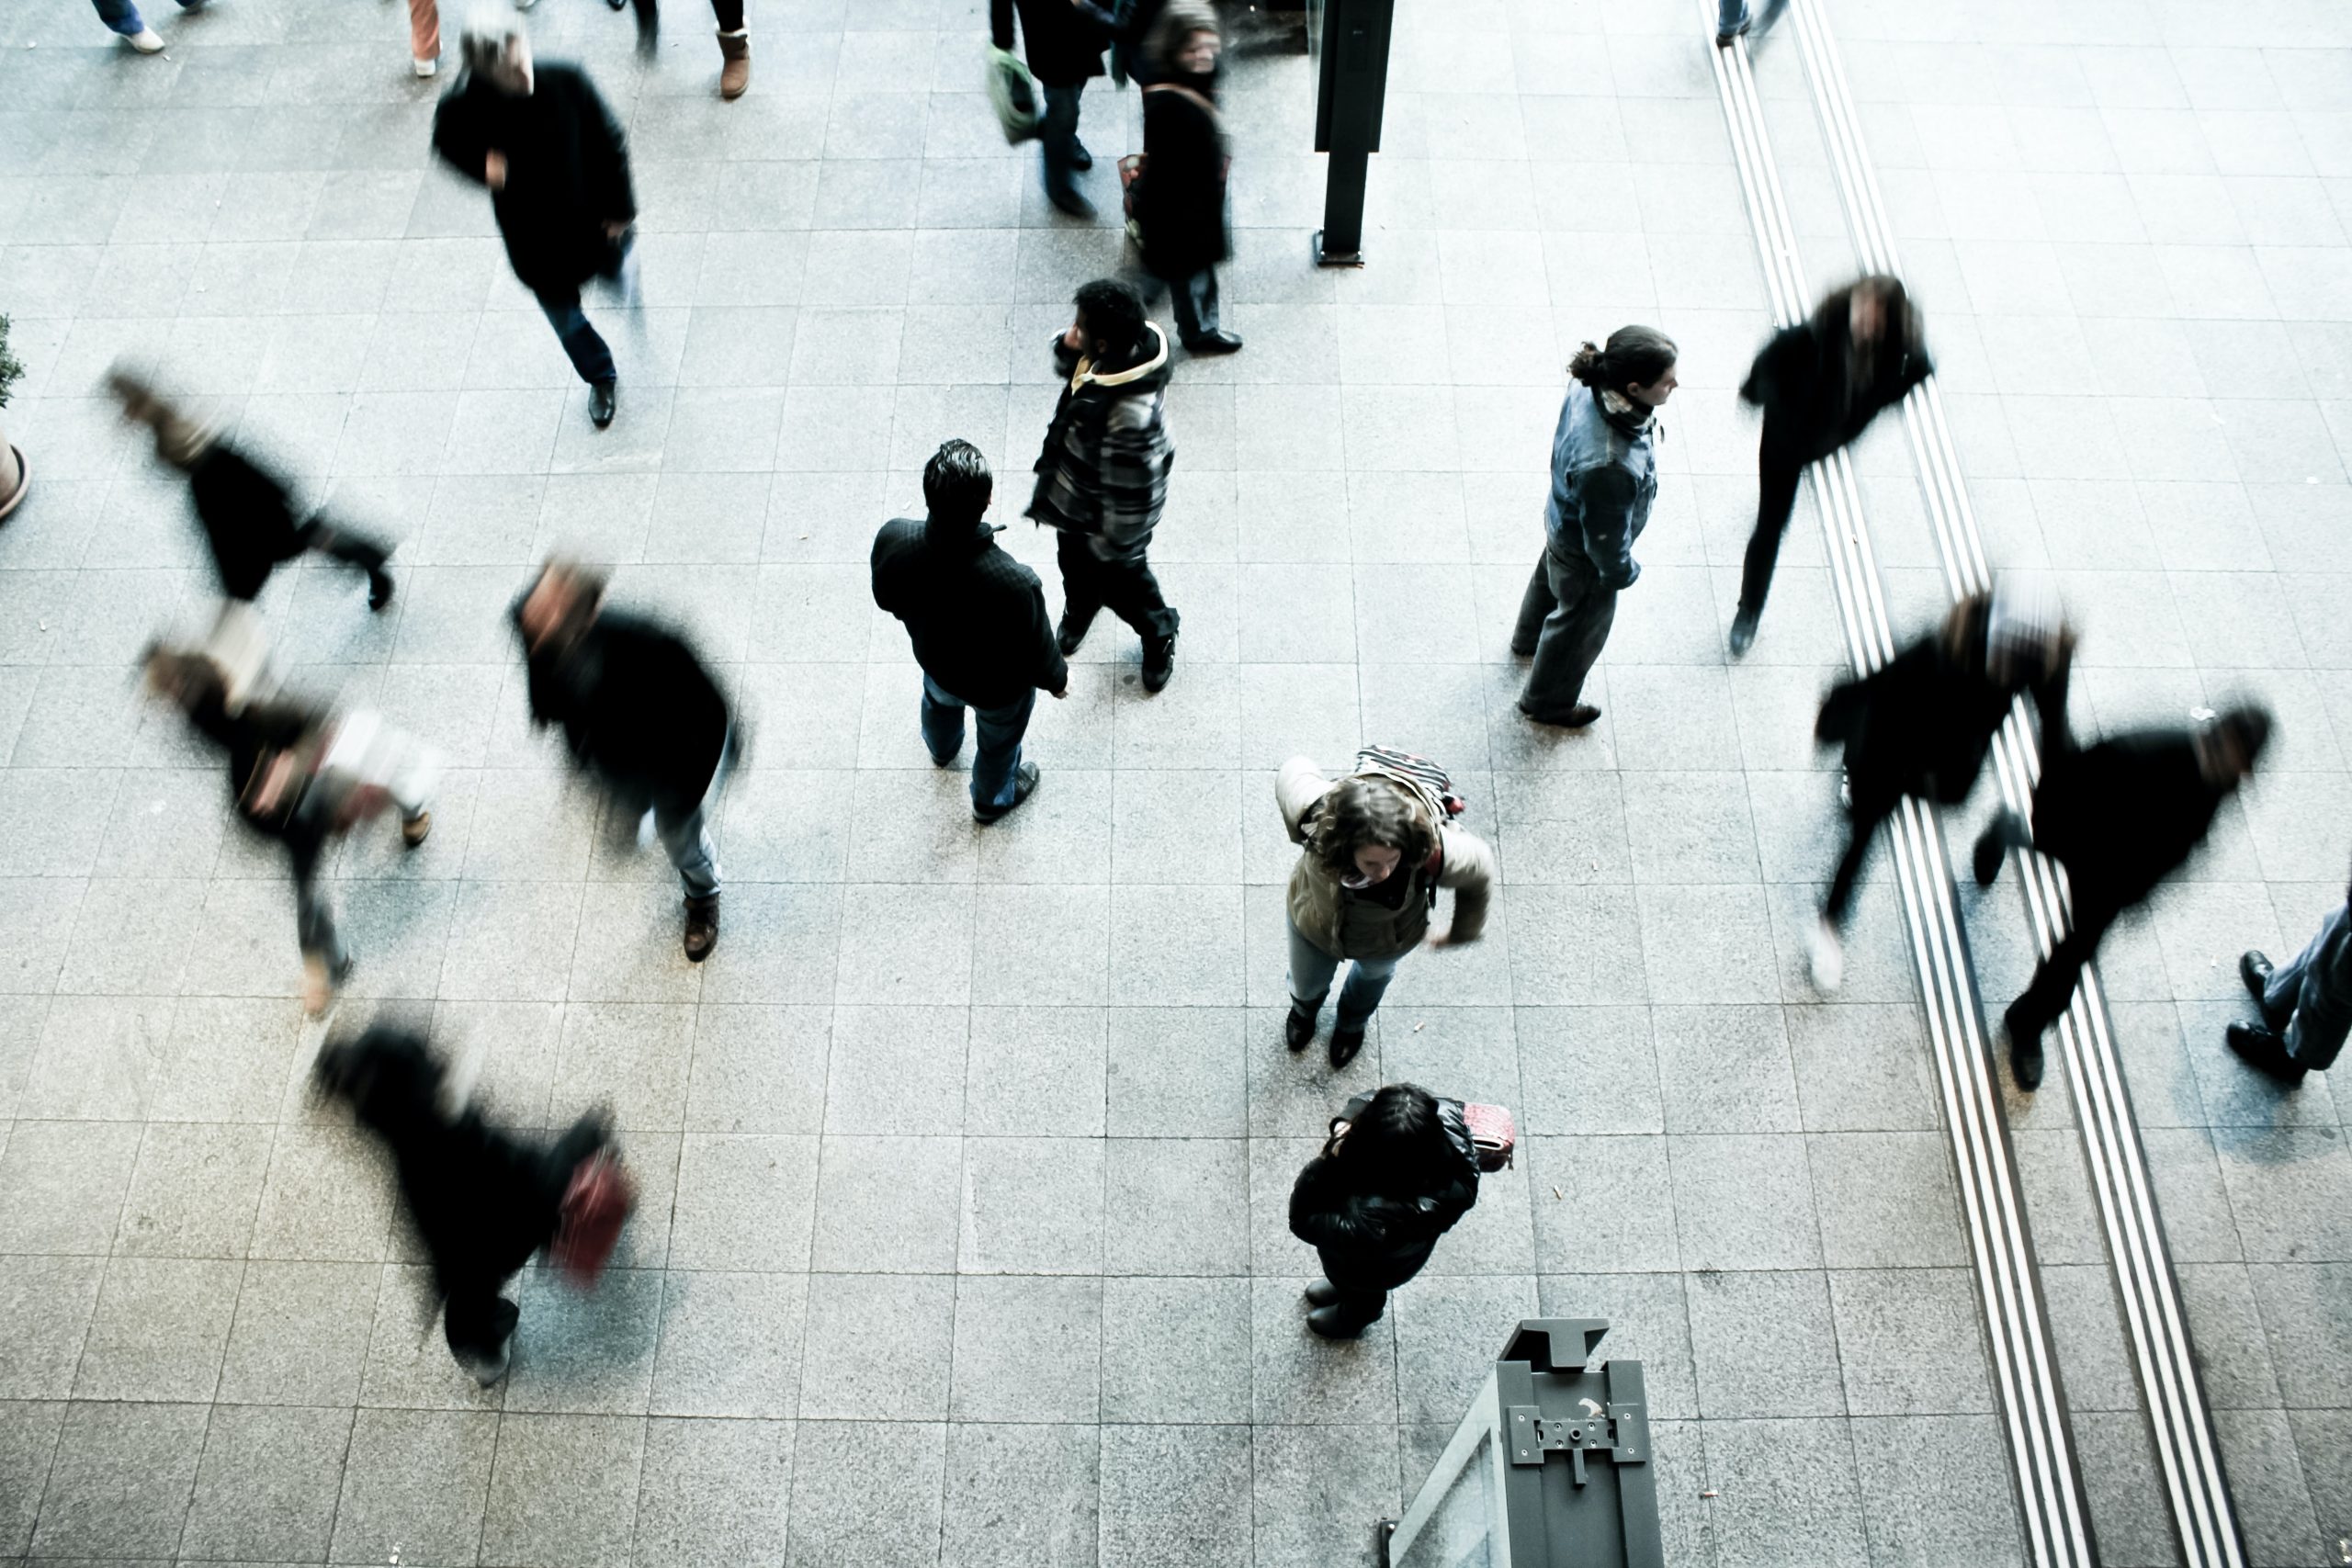 Blur image of moving people at train platform